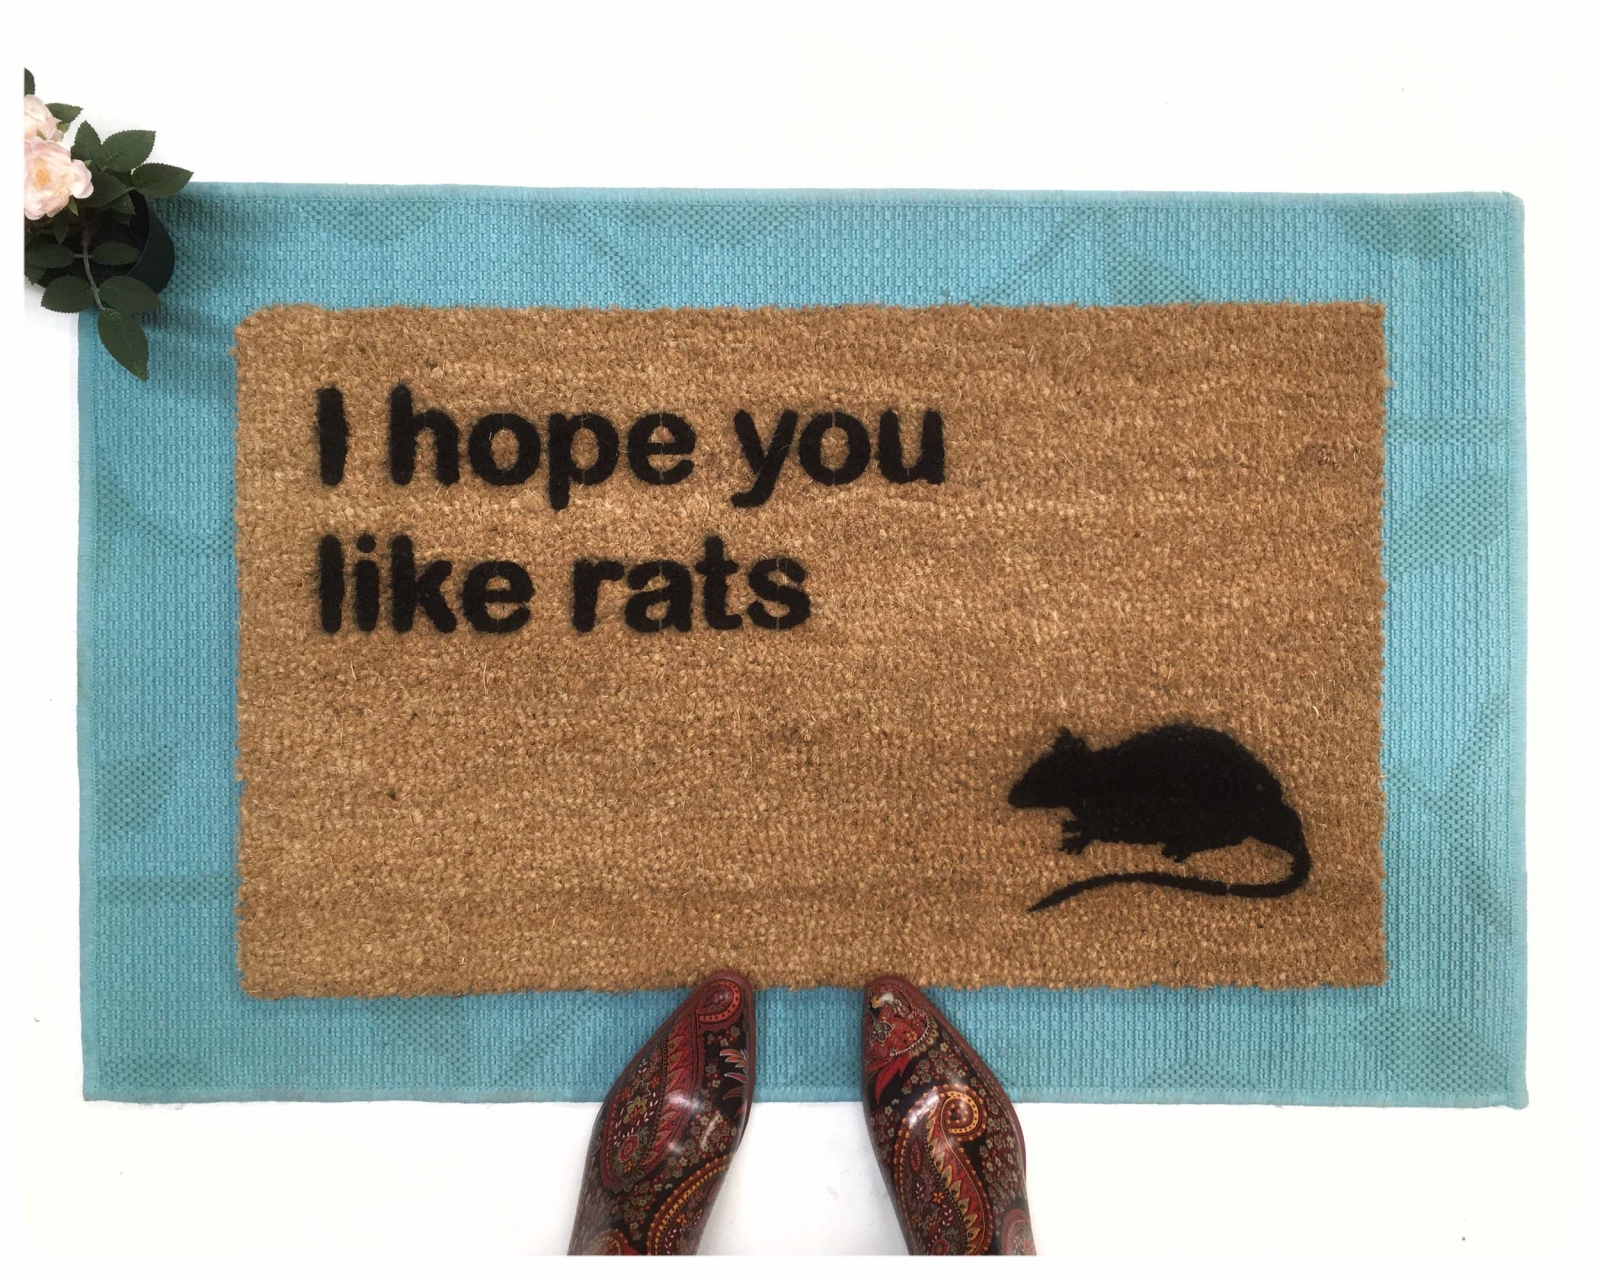 I hope you like rats funny halloween doormat | DAMN GOOD DOORMATS